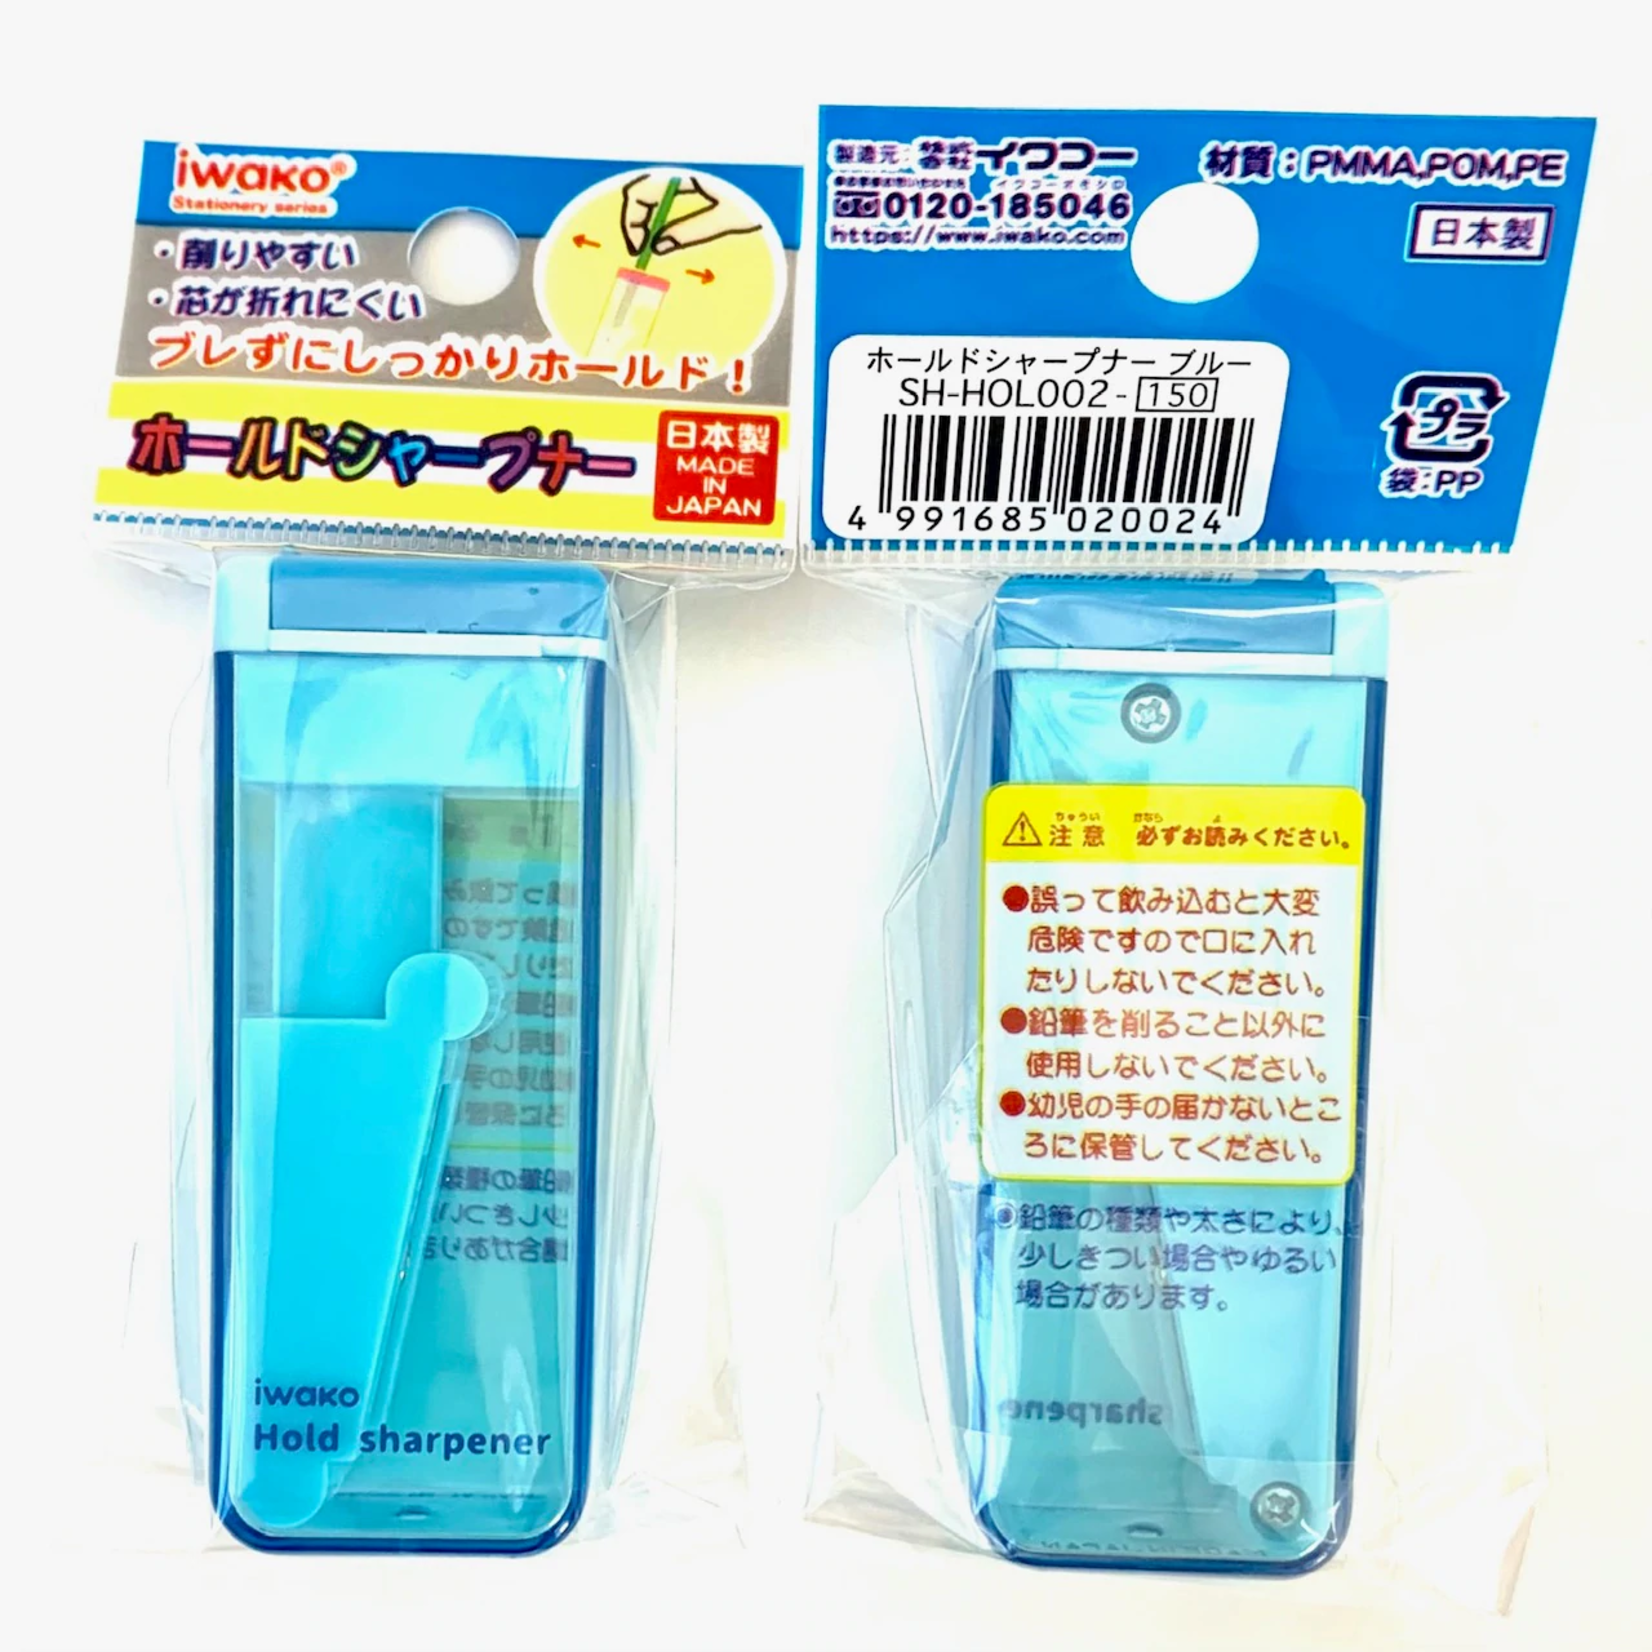 Iwako Iwako Pencil Sharpener - Blue - 33333